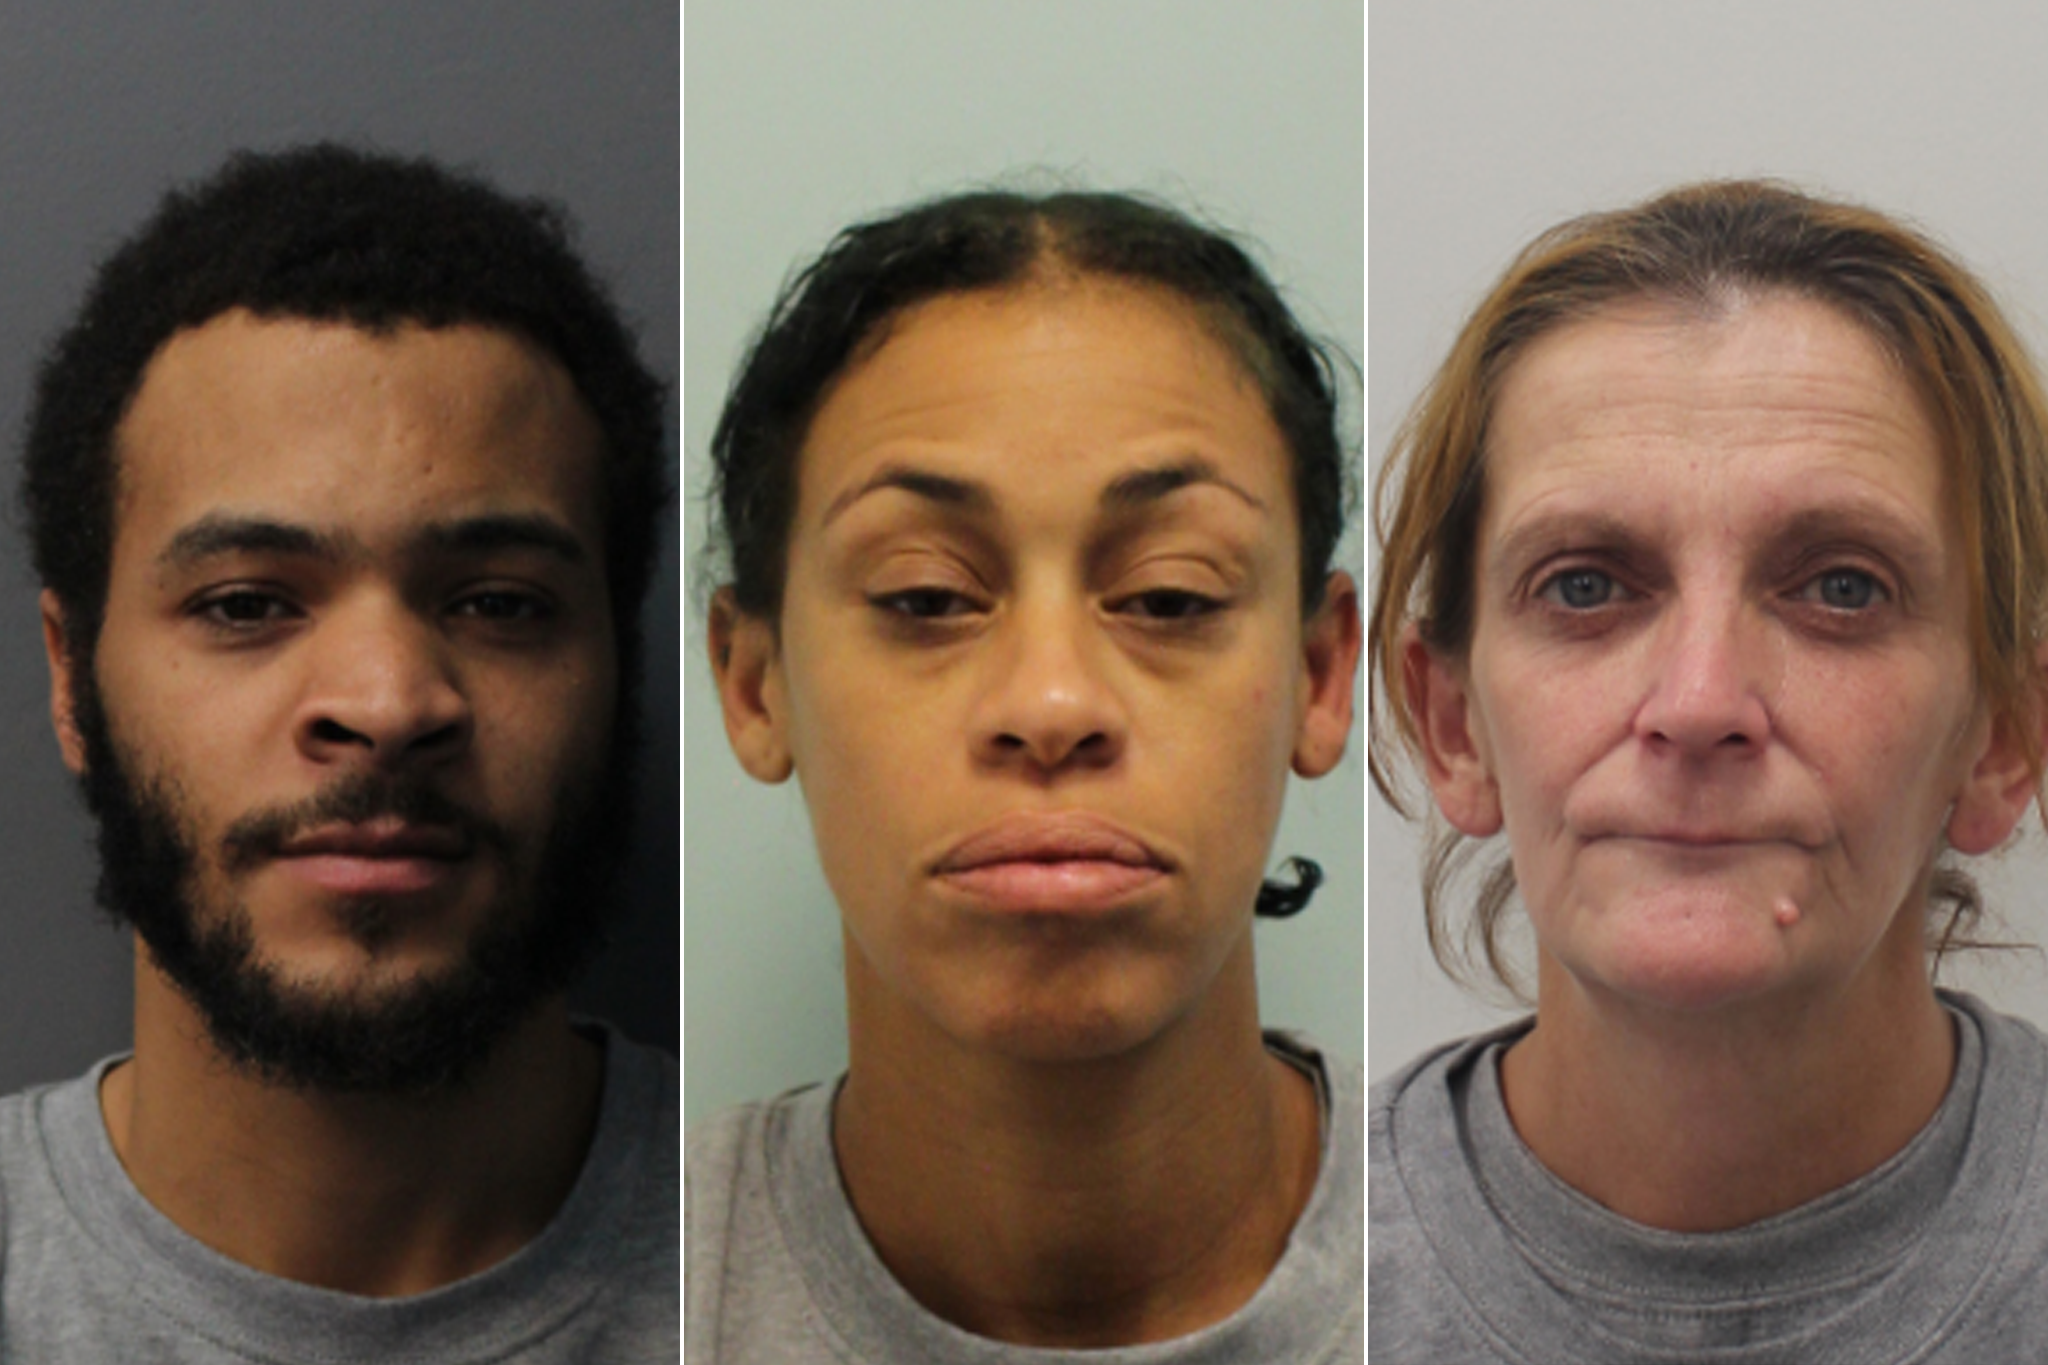 Ashana Studholme, Shaun Pendlebury and Lisa Richardson have been sentenced for the murder of Shakira Spencer at The Old Bailey